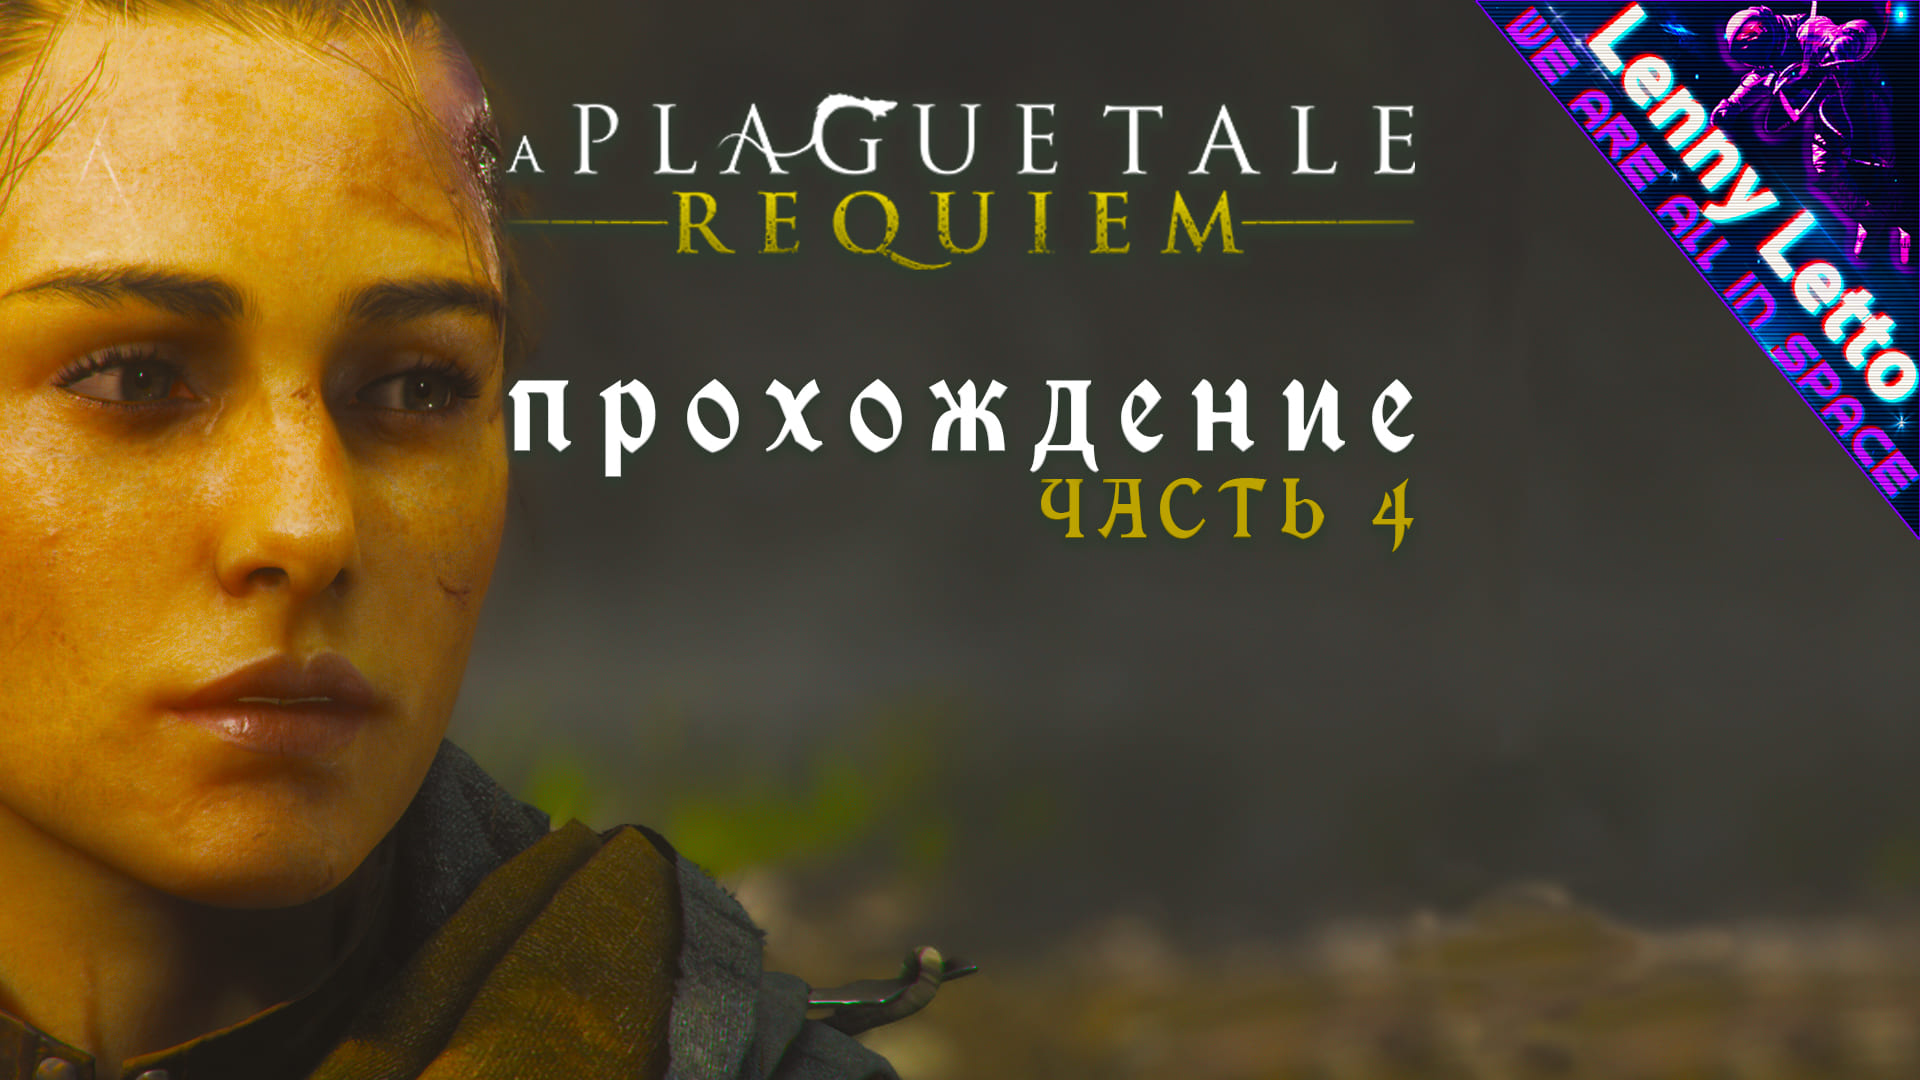 A Plague Tale: Requiem. Прохождение. Часть 4